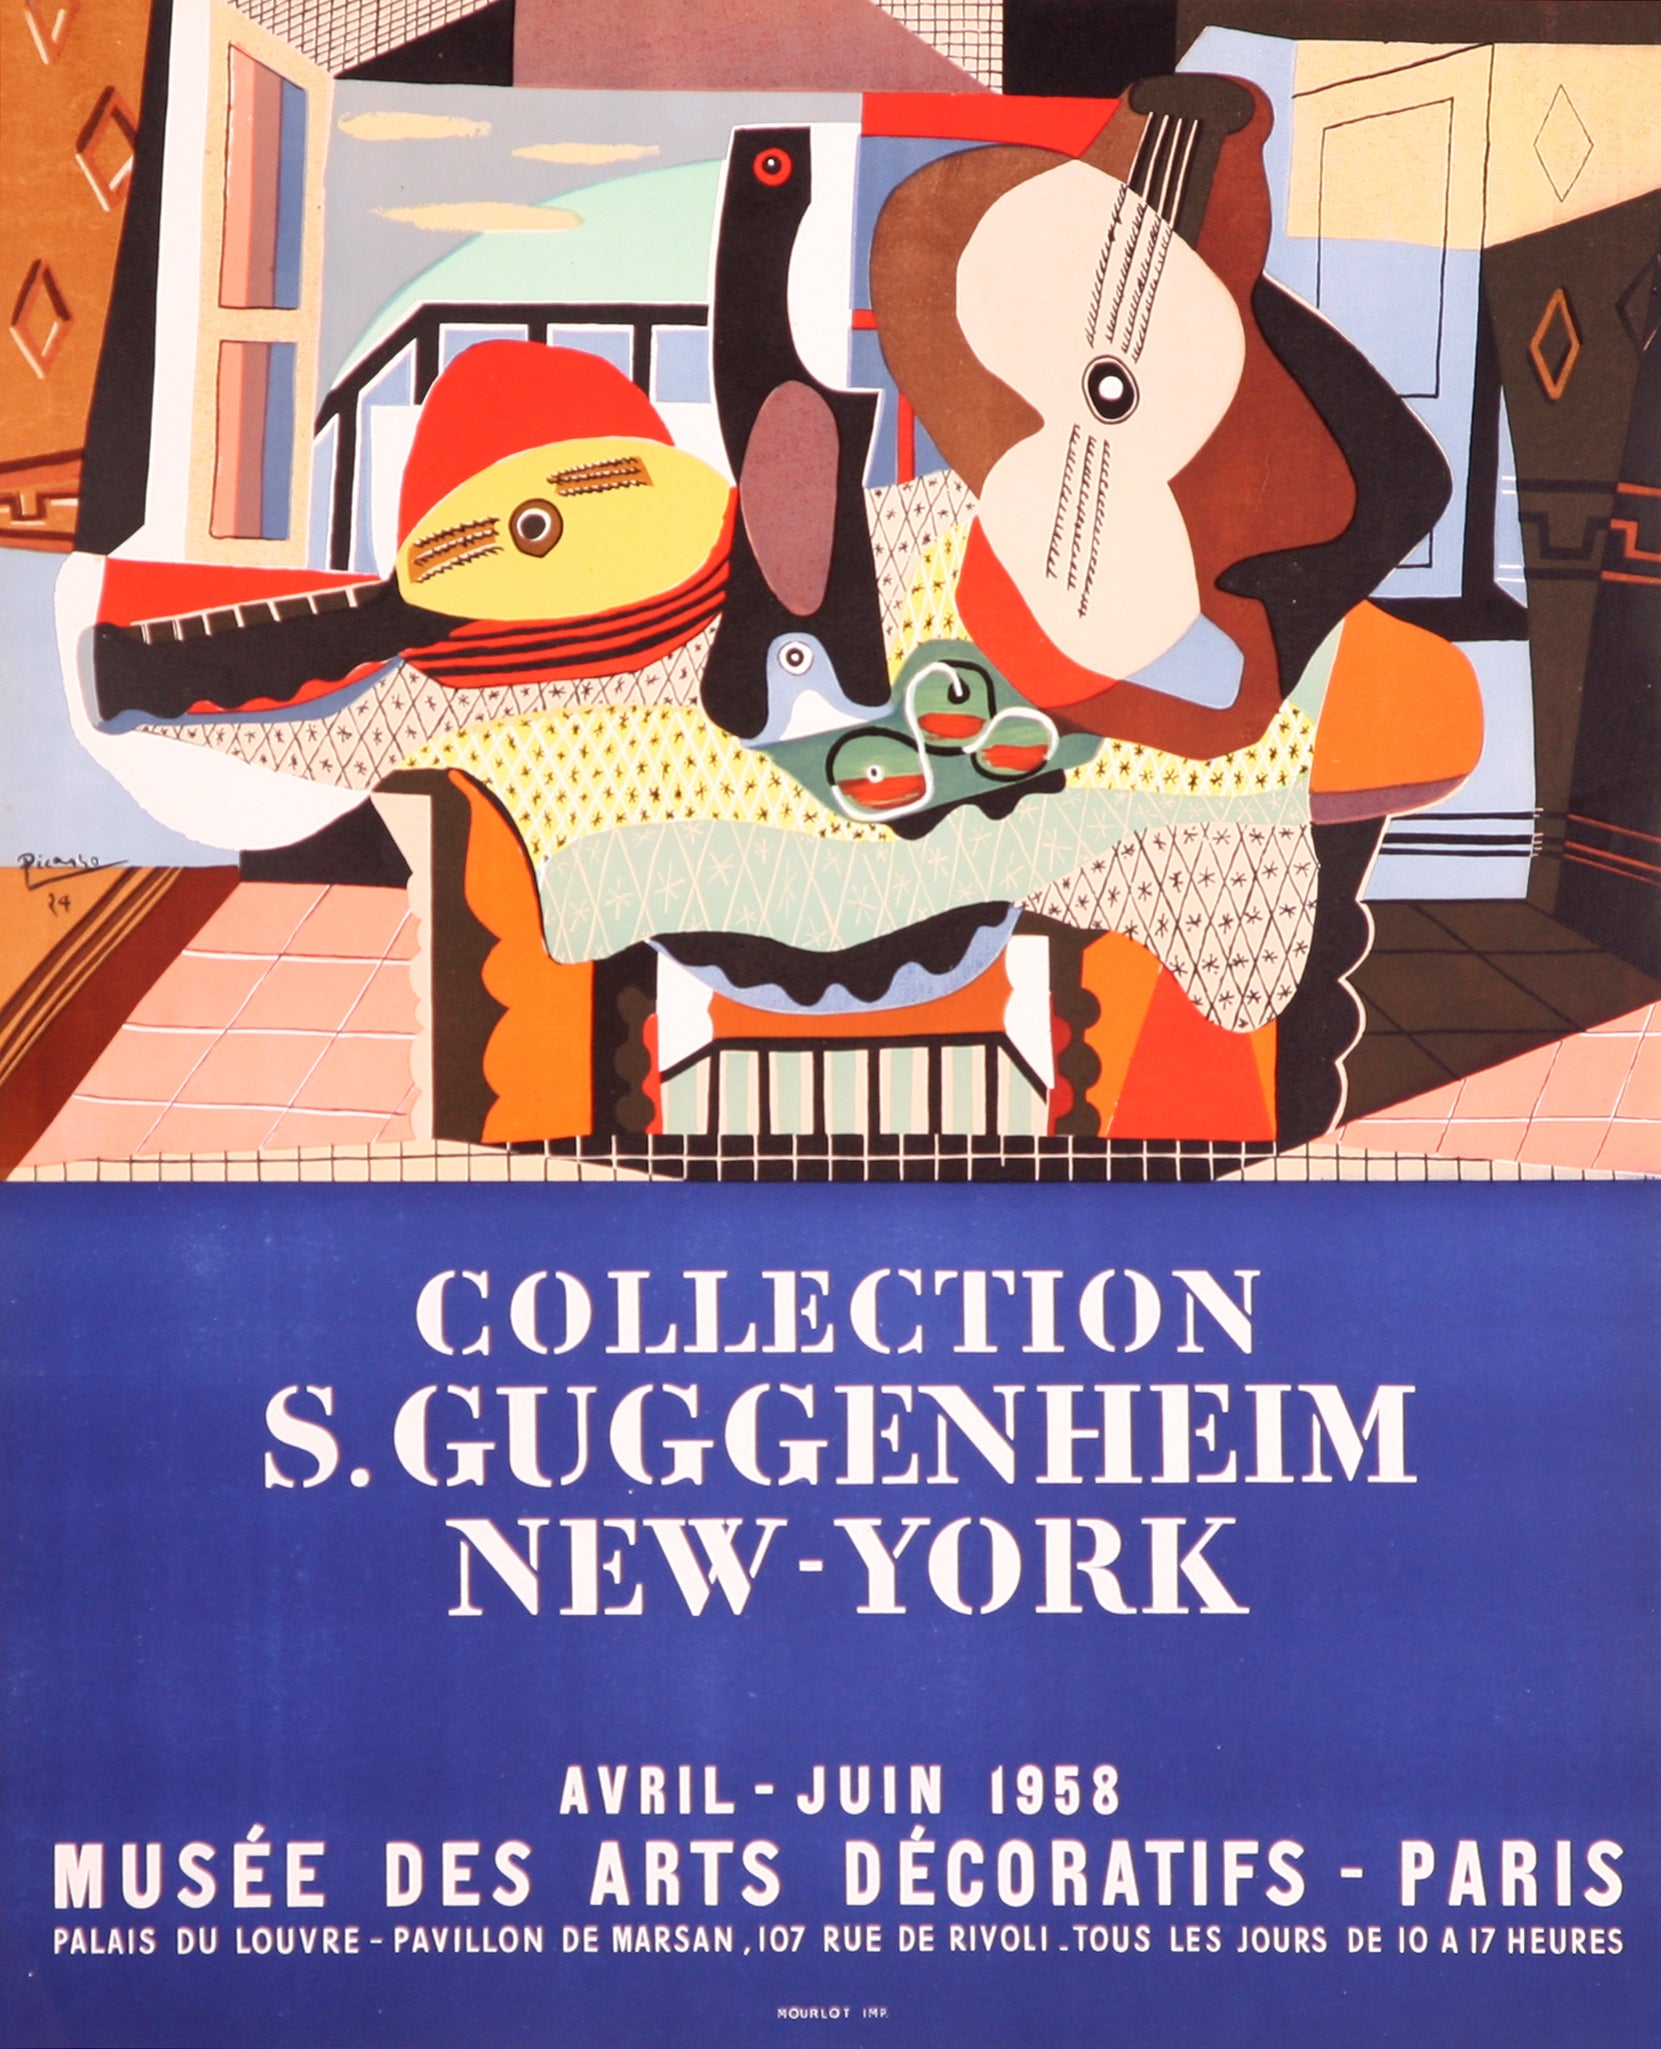 Salomon S. Guggenheim New York by Pablo Picasso - Mourlot Editions - Fine_Art - Poster - Lithograph - Wall Art - Vintage - Prints - Original